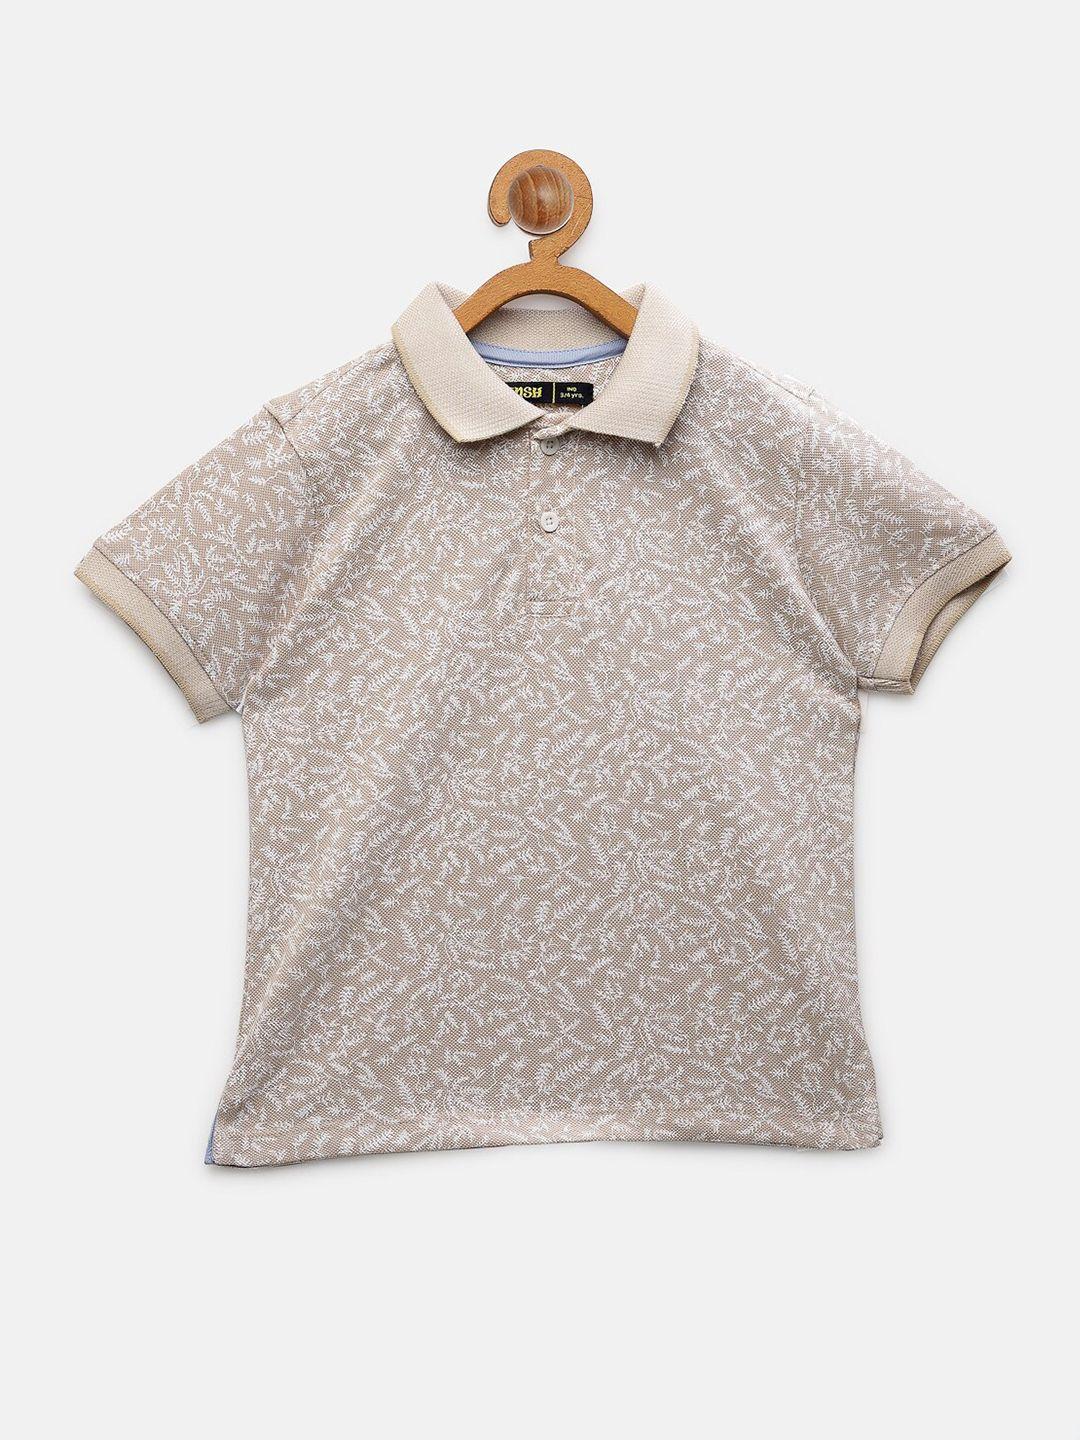 nynsh- pluss kids boys beige & white floral printed polo collar cotton t-shirt